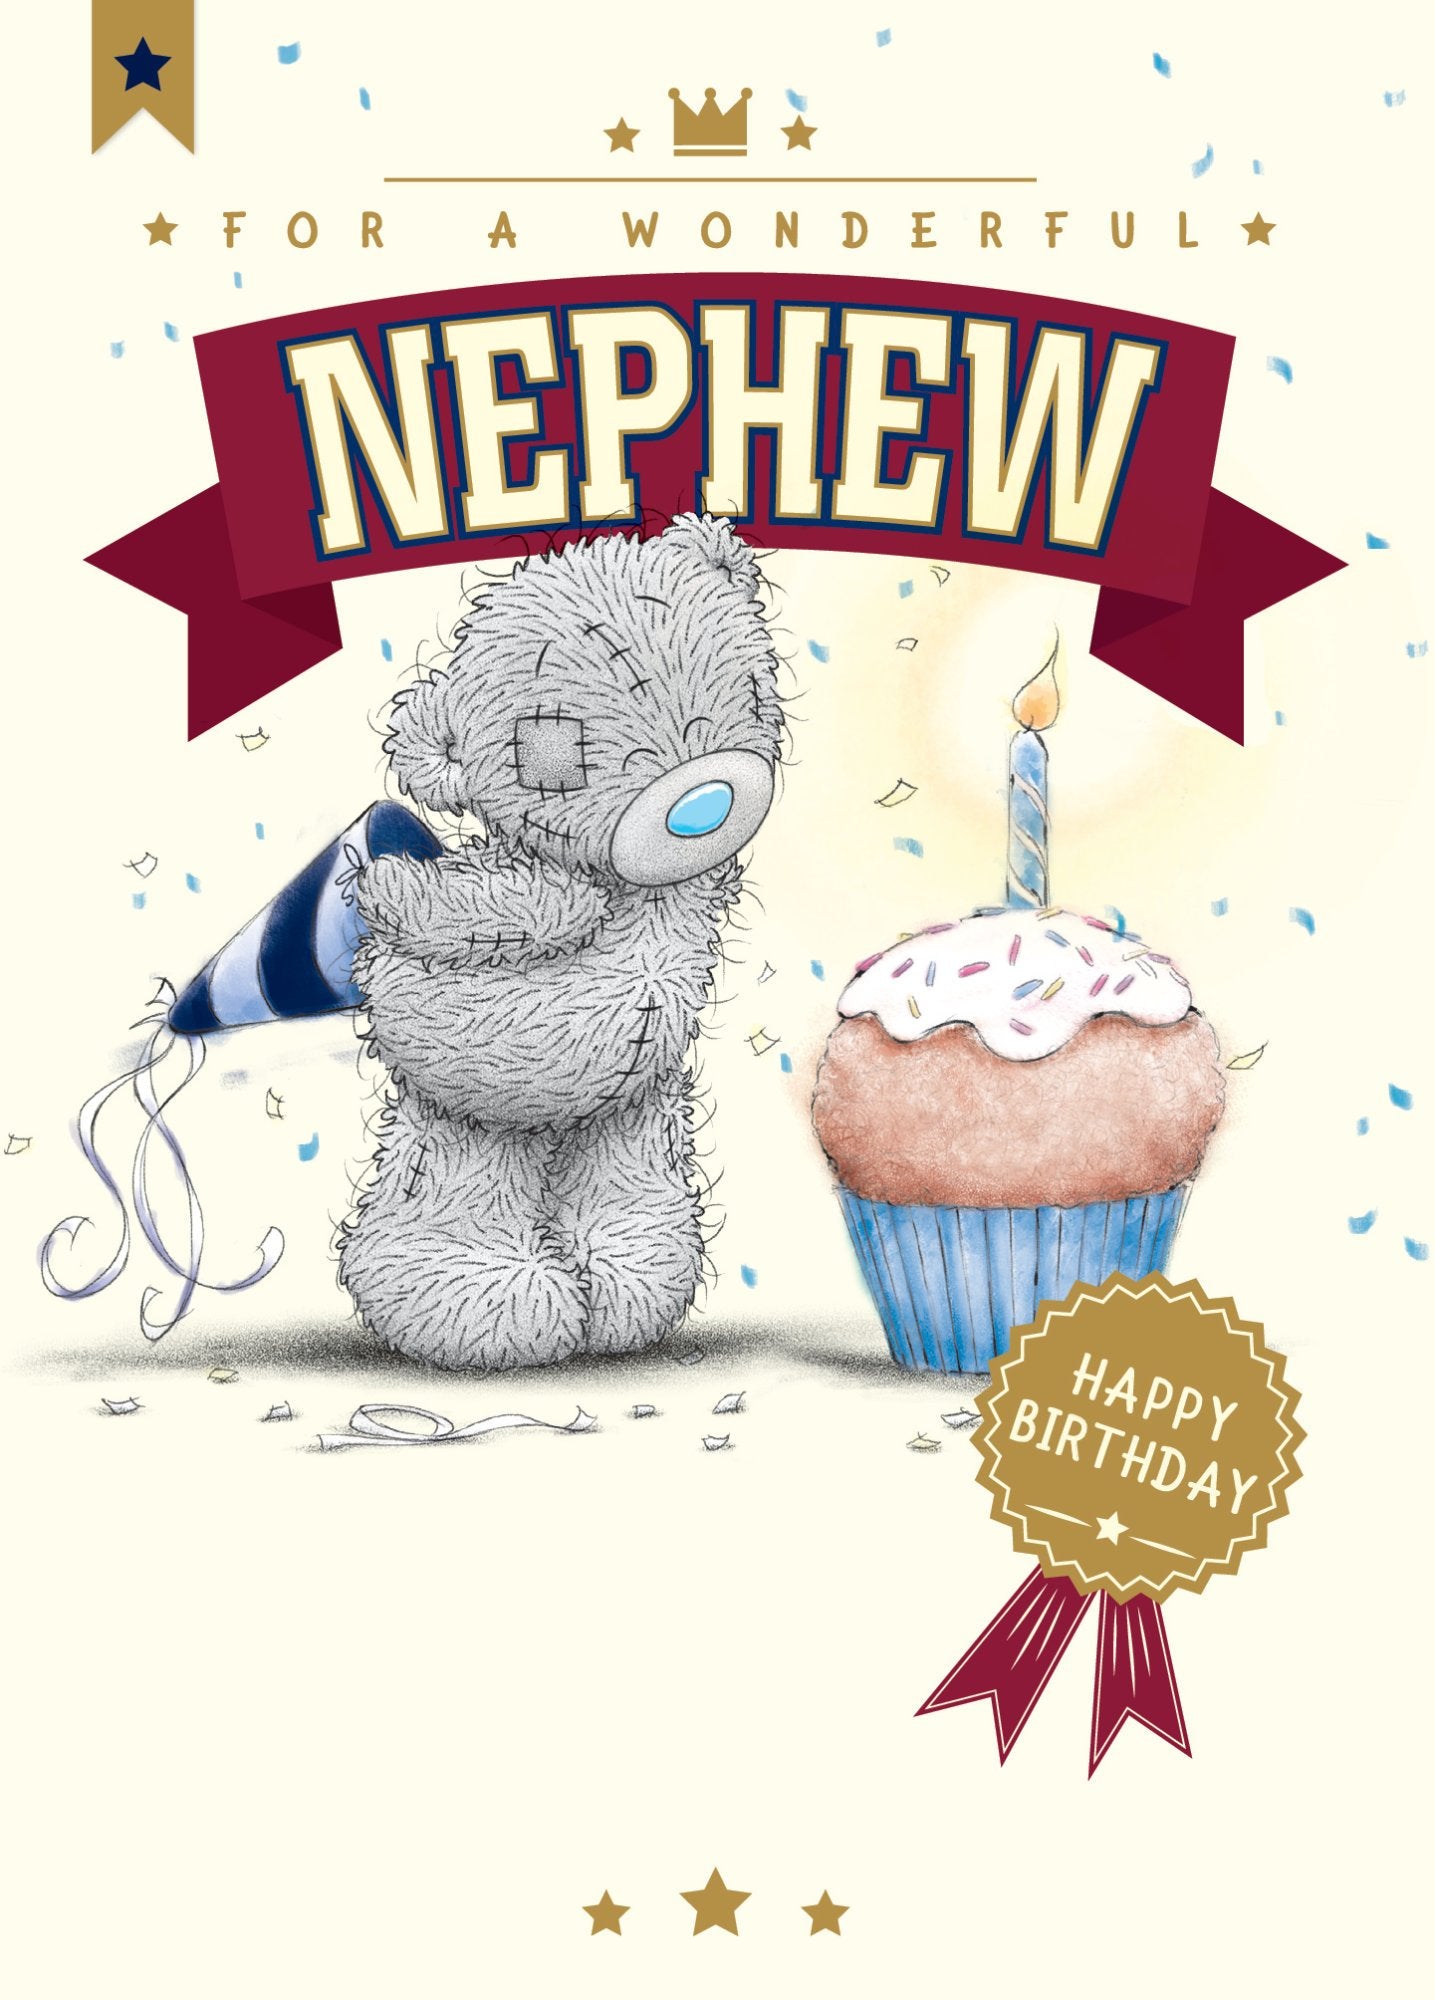 Photograph of Nephew Birthday Teddy Cupcake Greetings Card at Nicole's Shop